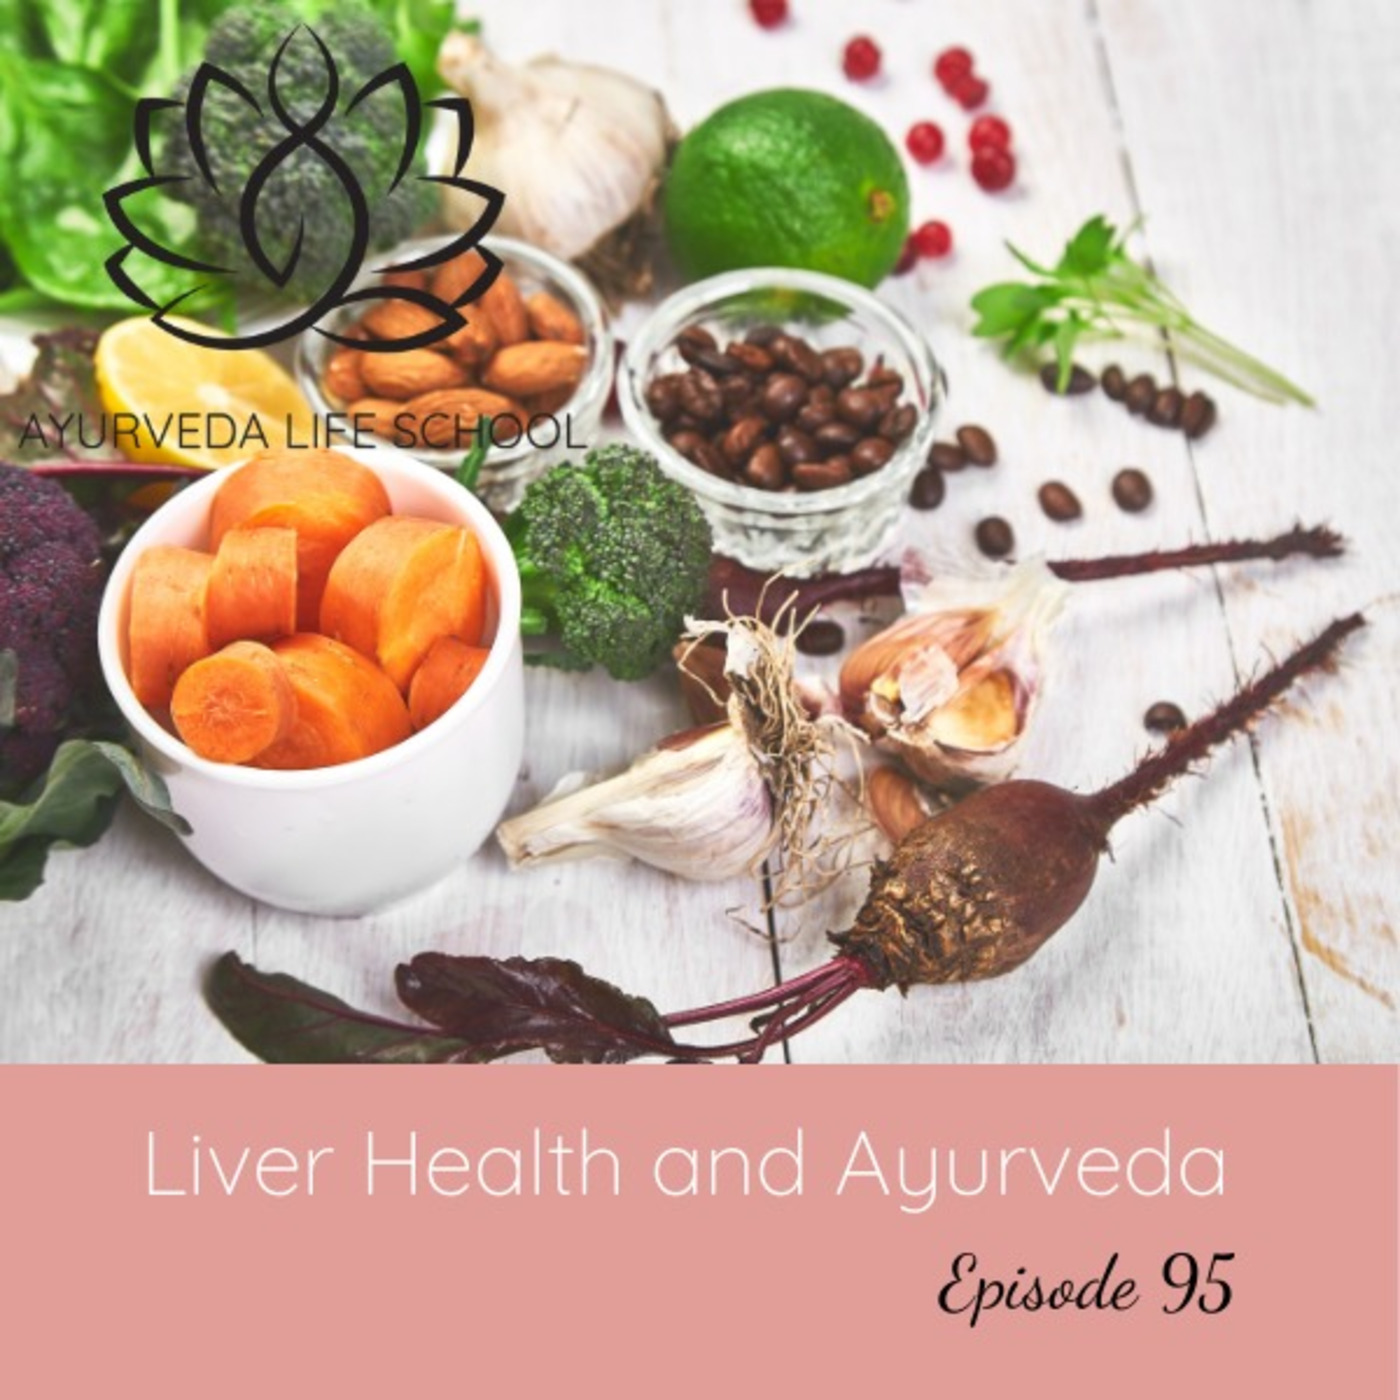 Episode 95: Ep #95: Liver Health and Ayurveda